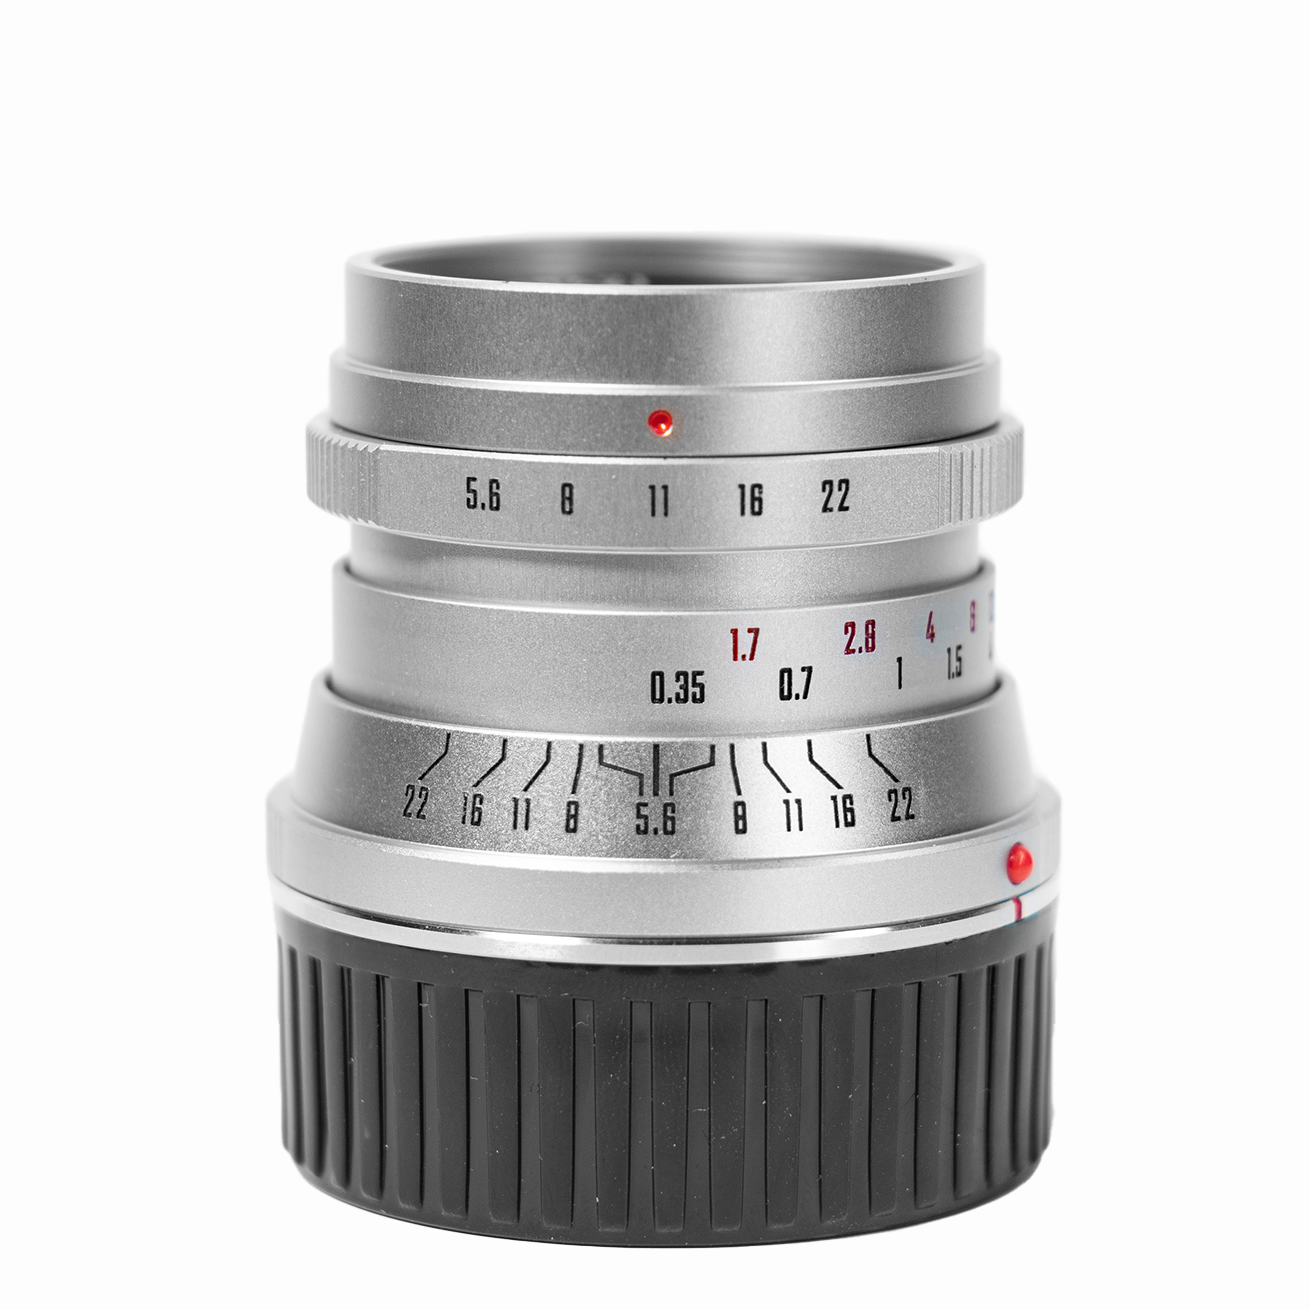 Mitakon Zhongyi Creator 28mm f/5.6 Lens for  Nikon Z